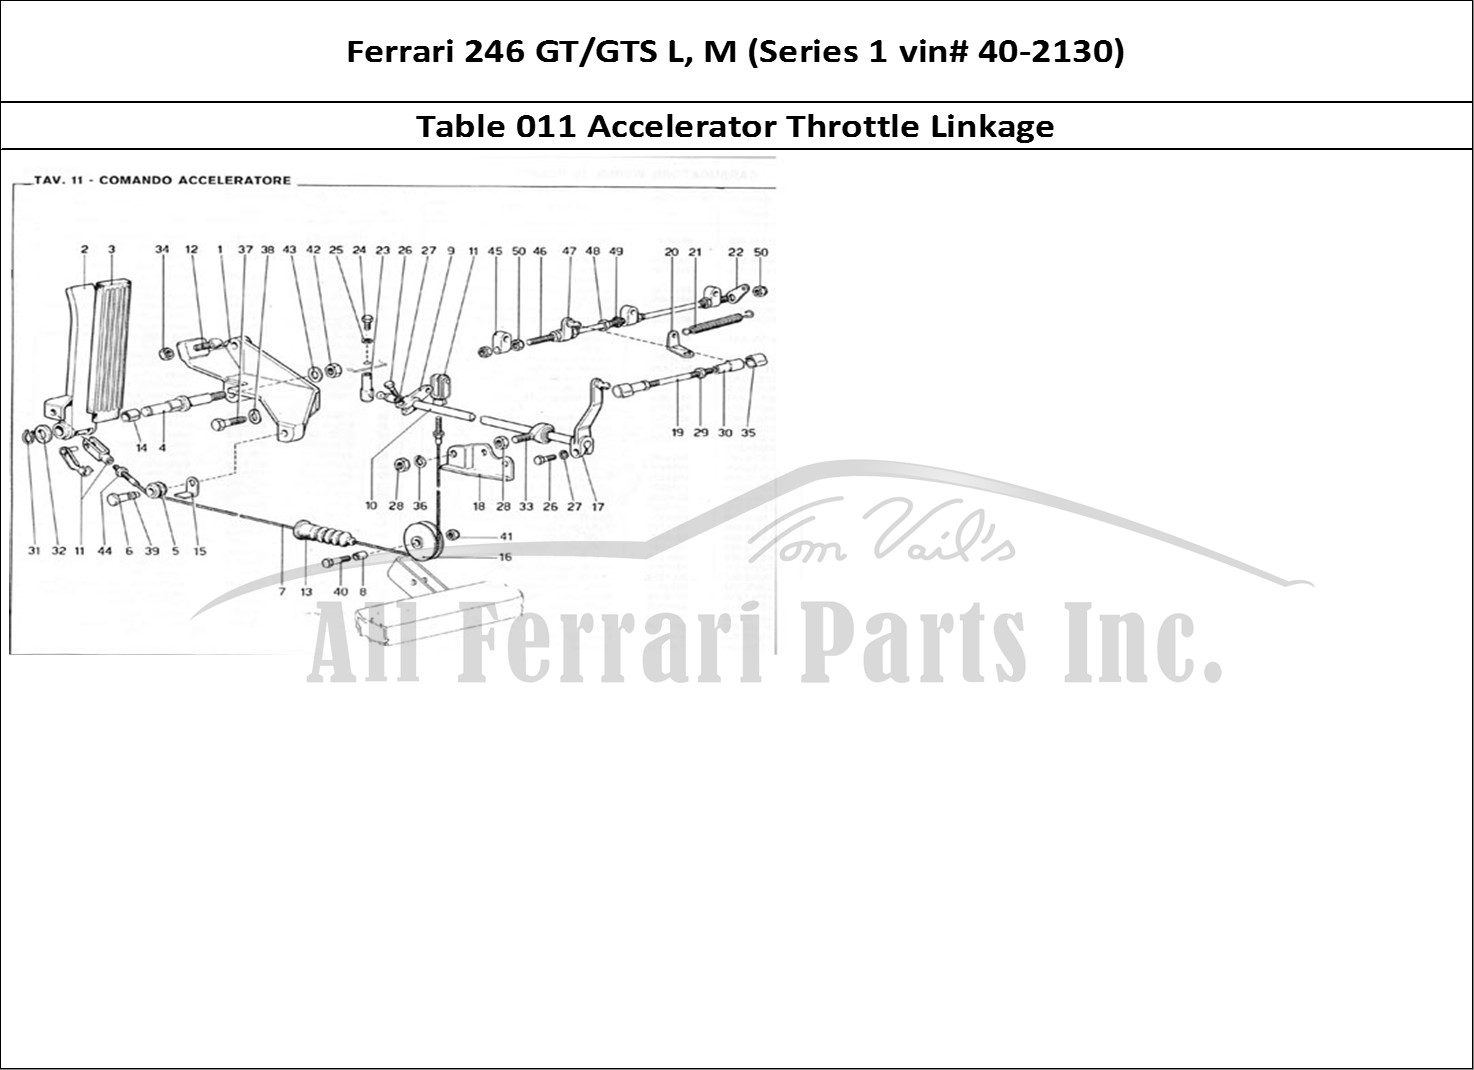 Ferrari Parts Ferrari 246 GT Series 1 Page 011 Throttle Control